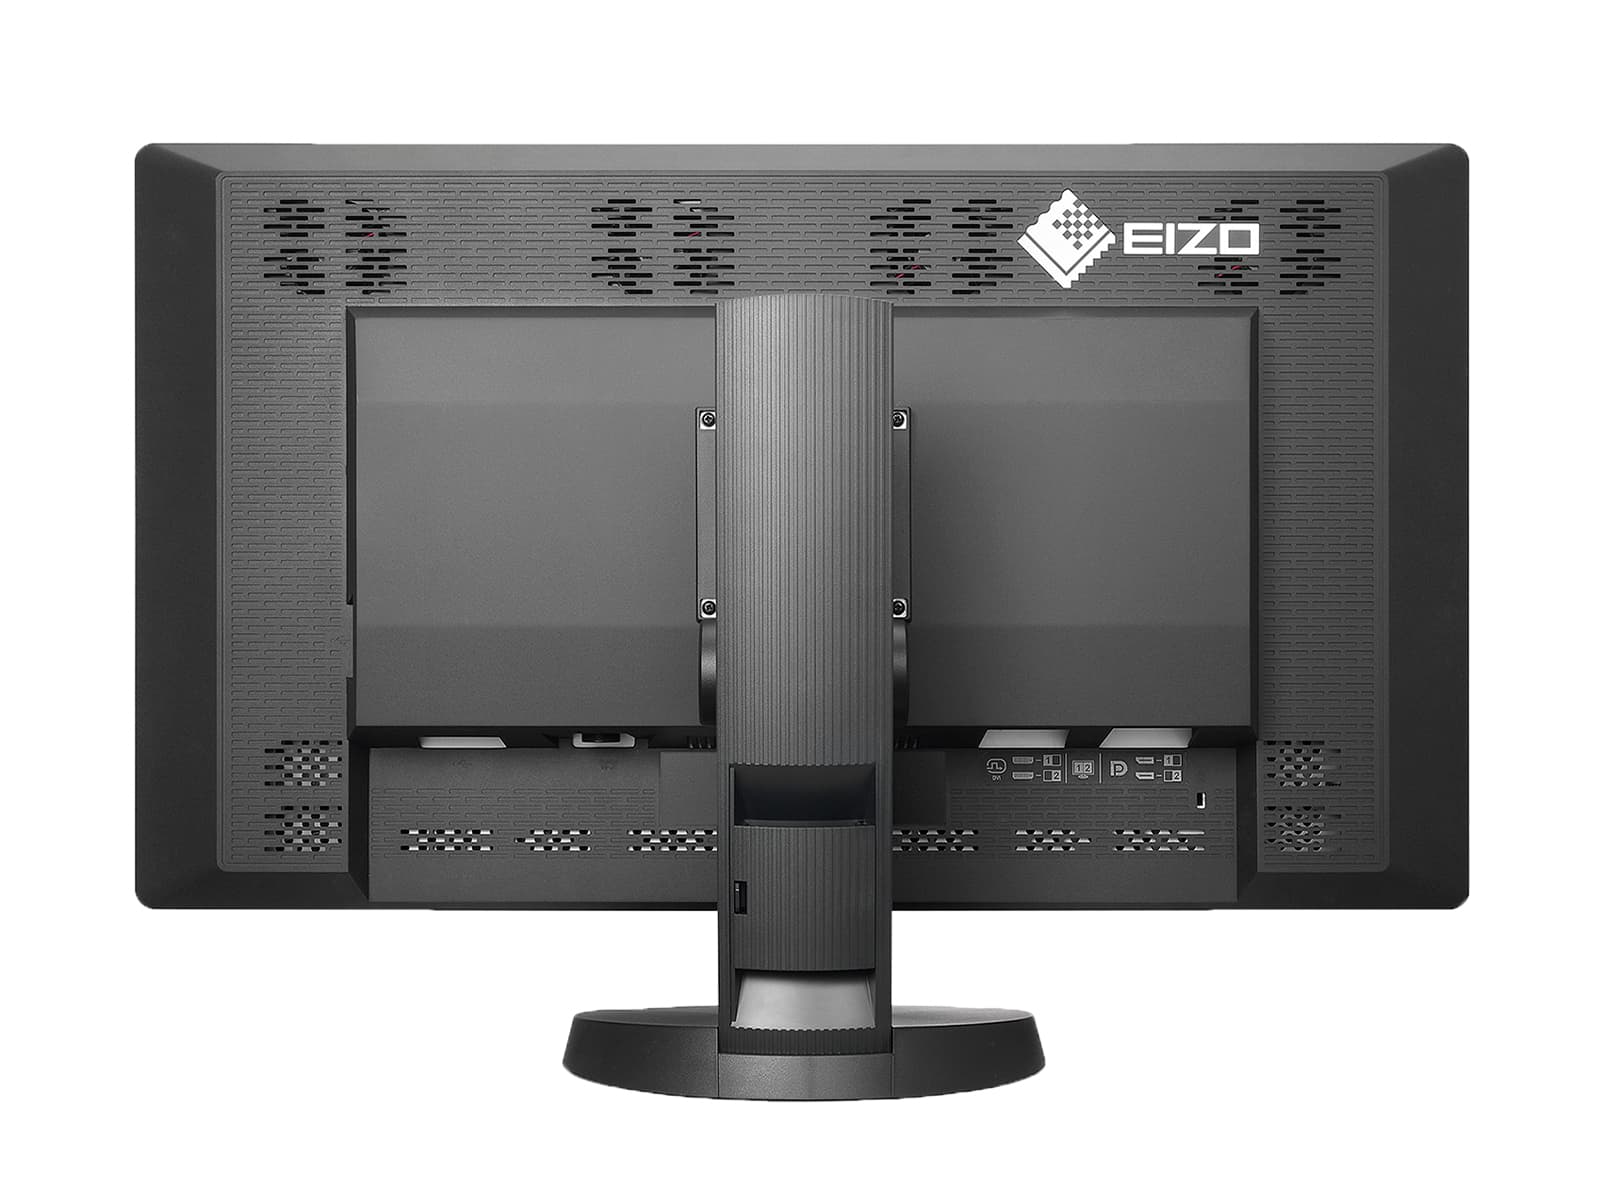 Eizo RadiForce RX850 8MP 31" Fusion Color LED Mammo 3D-DBT Breast Imaging Display (RX850-BK) Monitors.com 